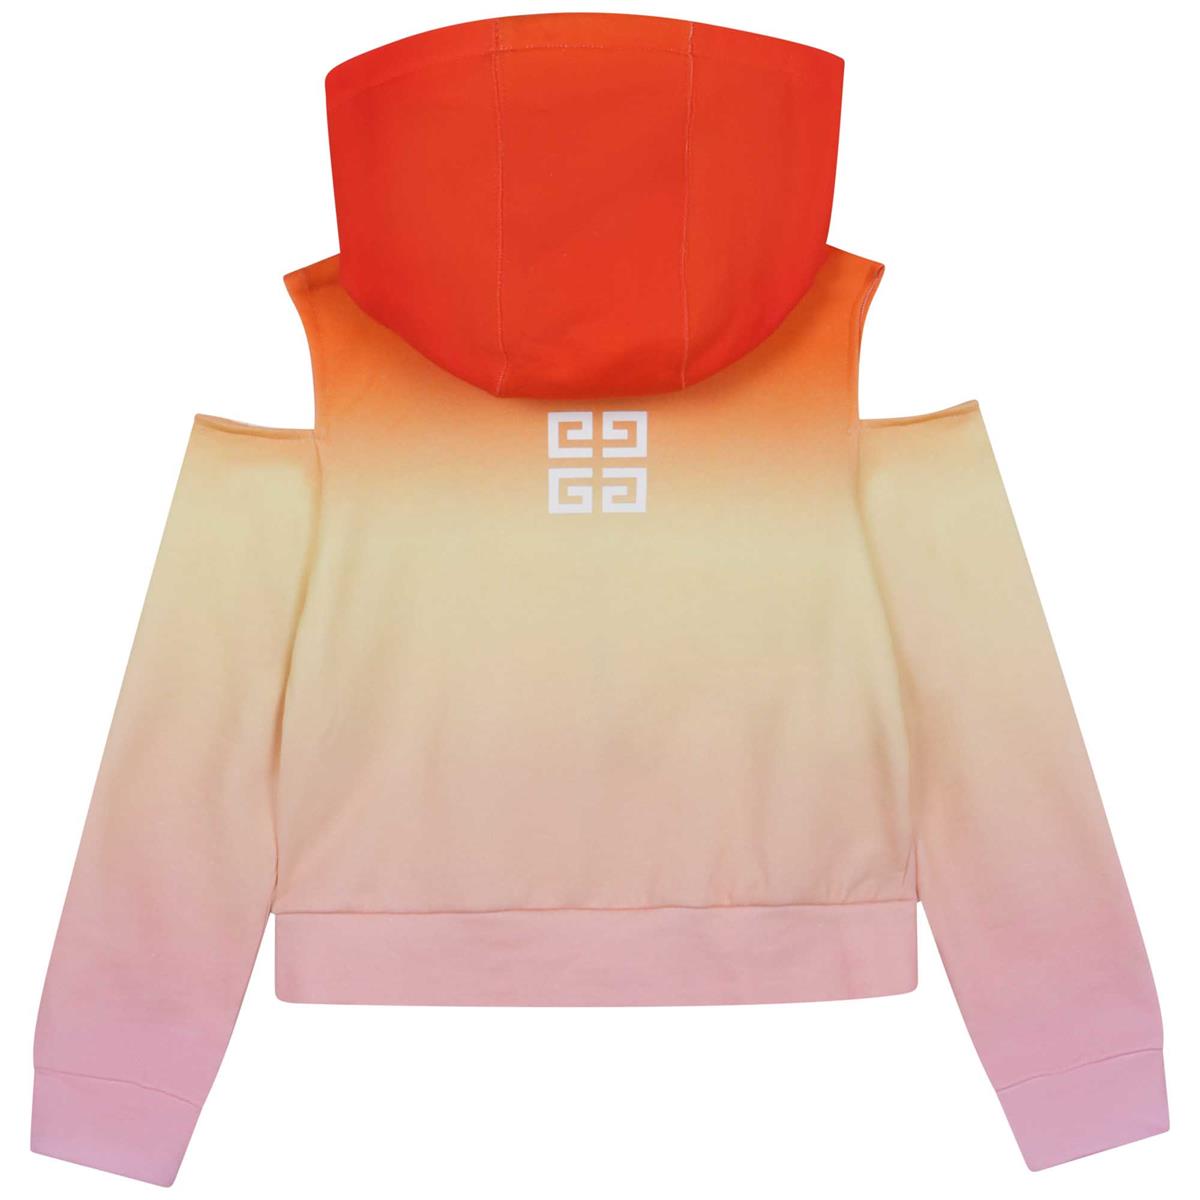 Boys & Girls Pink Hooded Sweatshirt